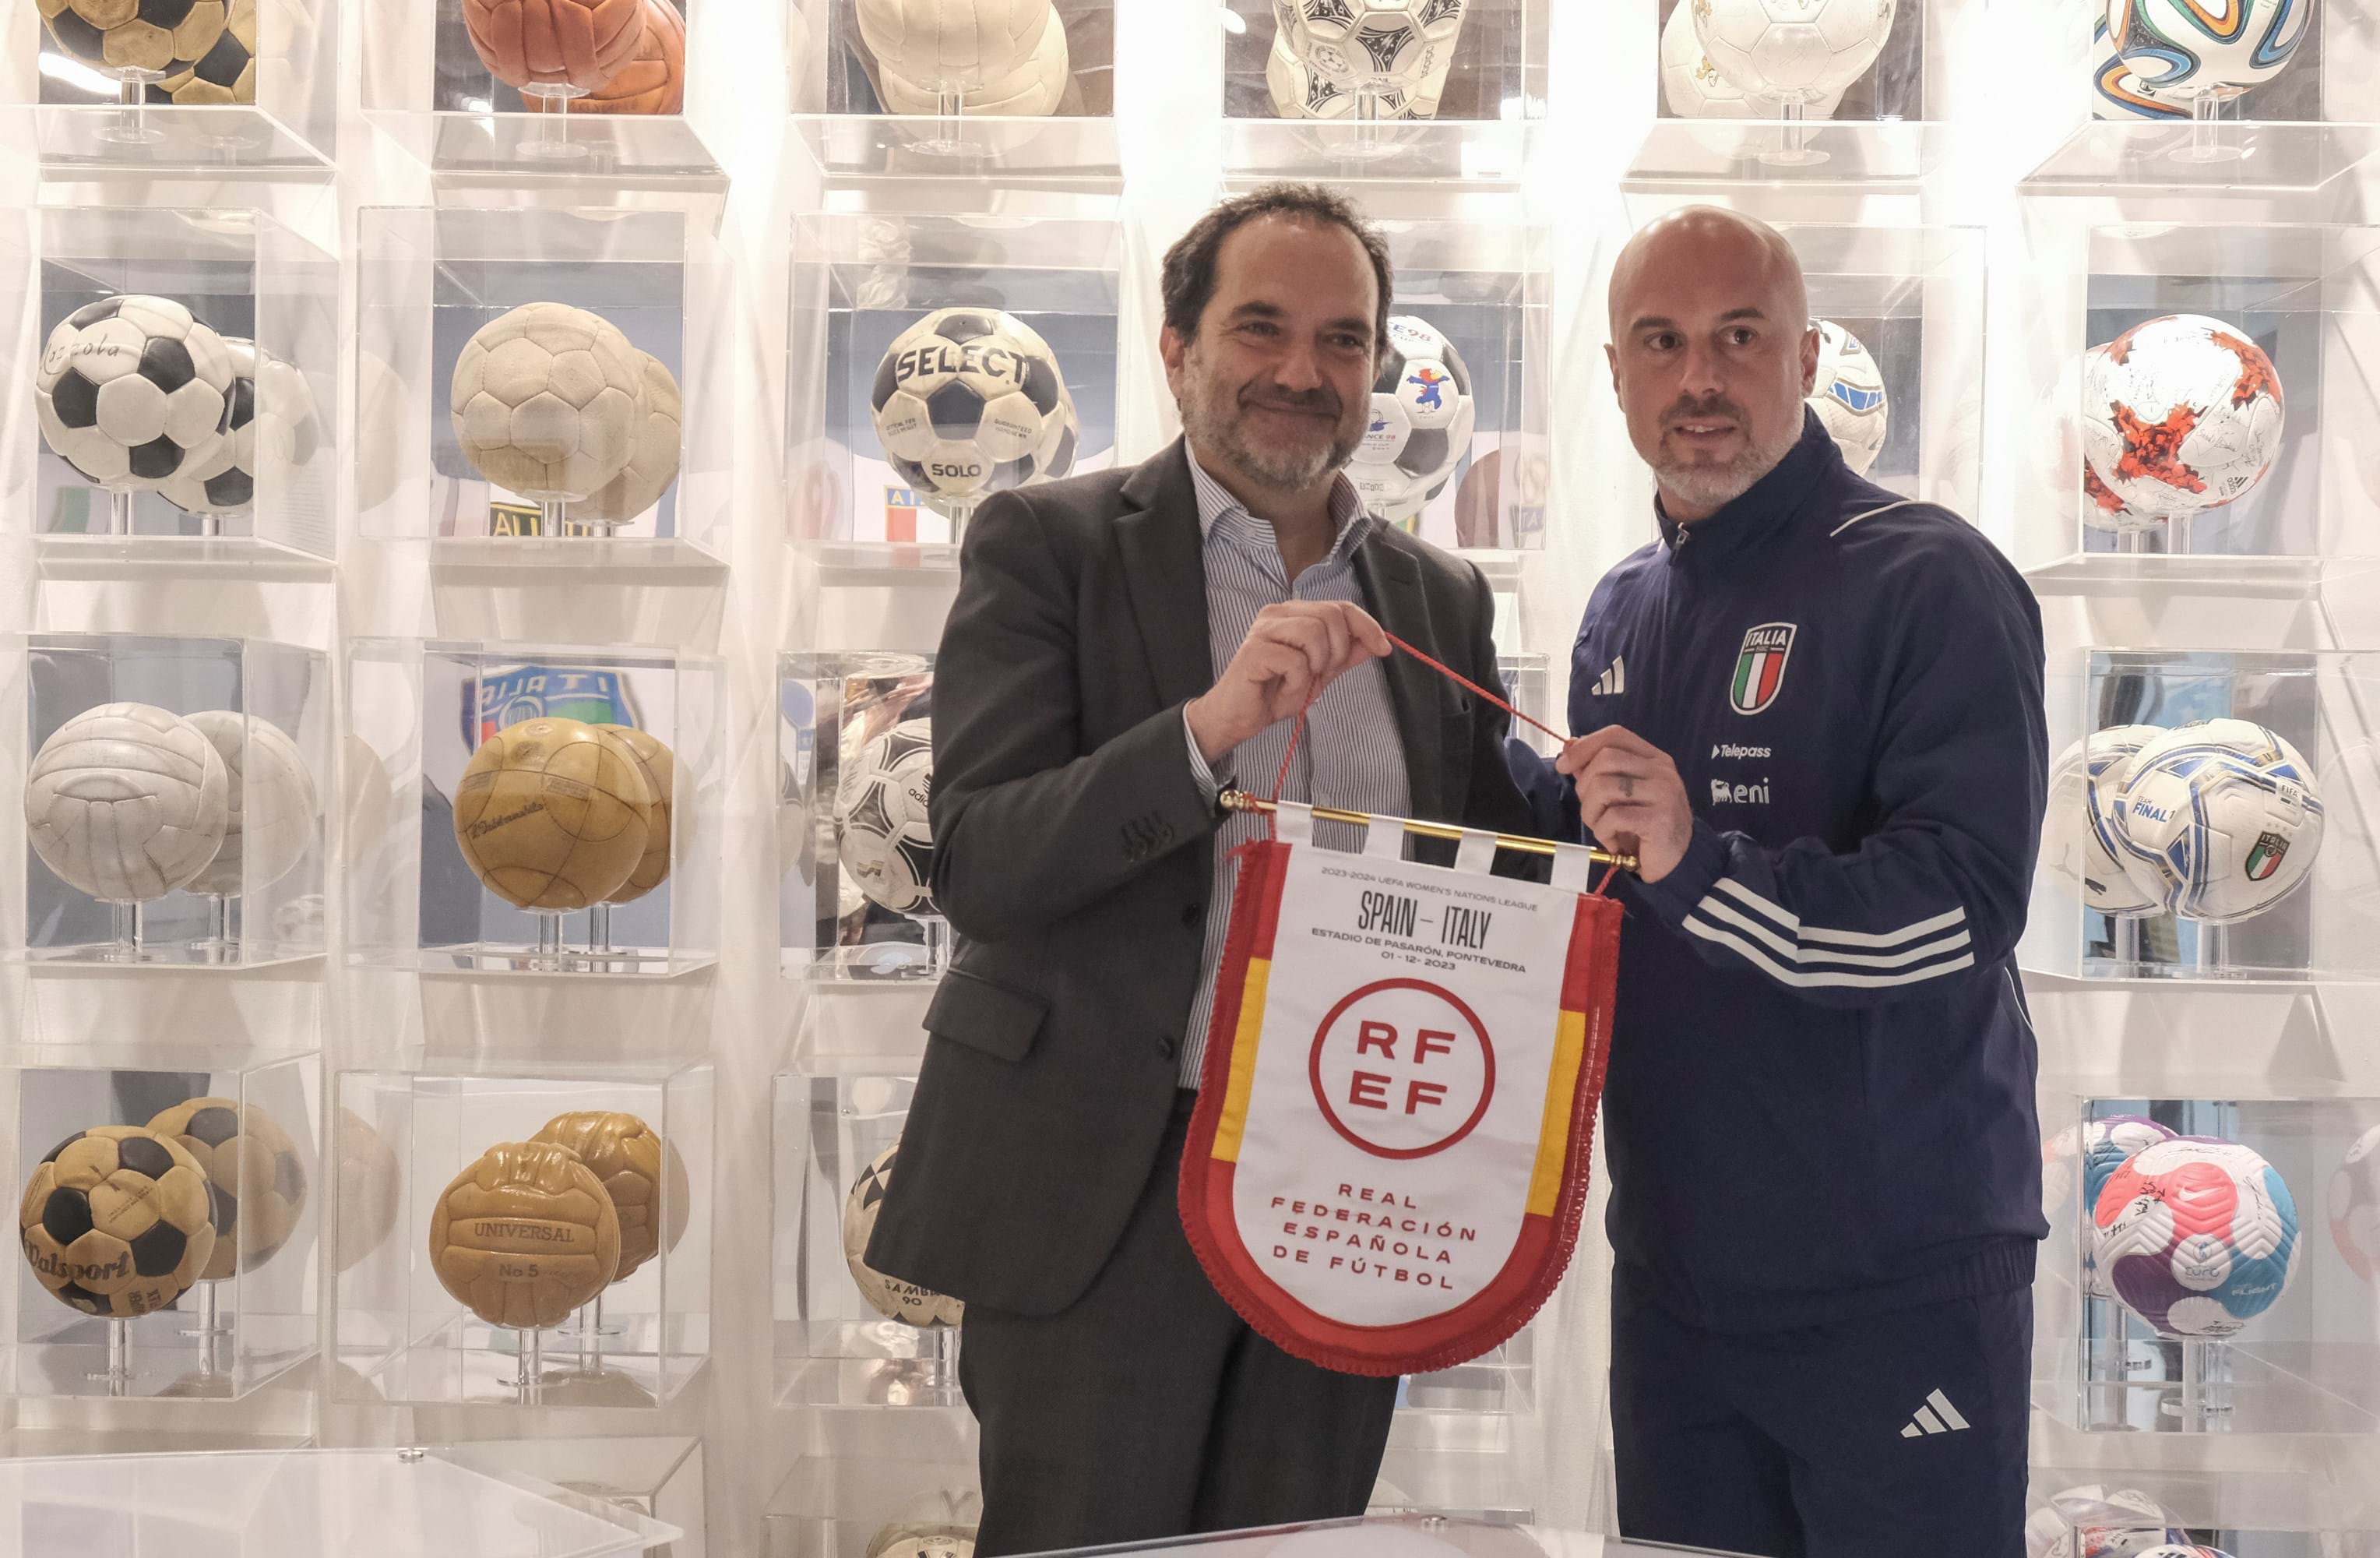 Soncin donates the Spain vs. Italy pennant to the Museo del Calcio